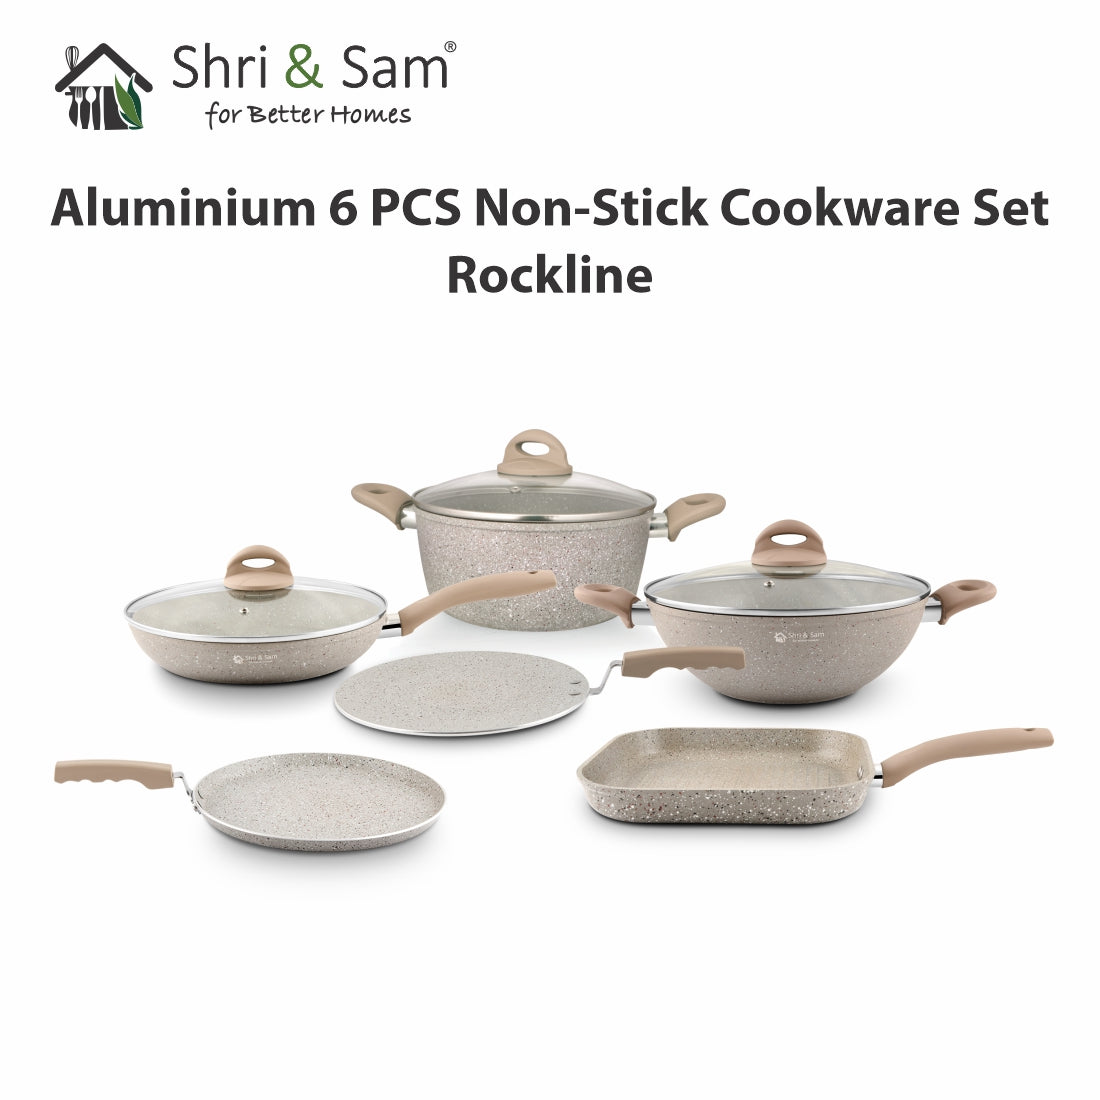 Aluminium 6 PCS Non-Stick Cookware Set Rockline